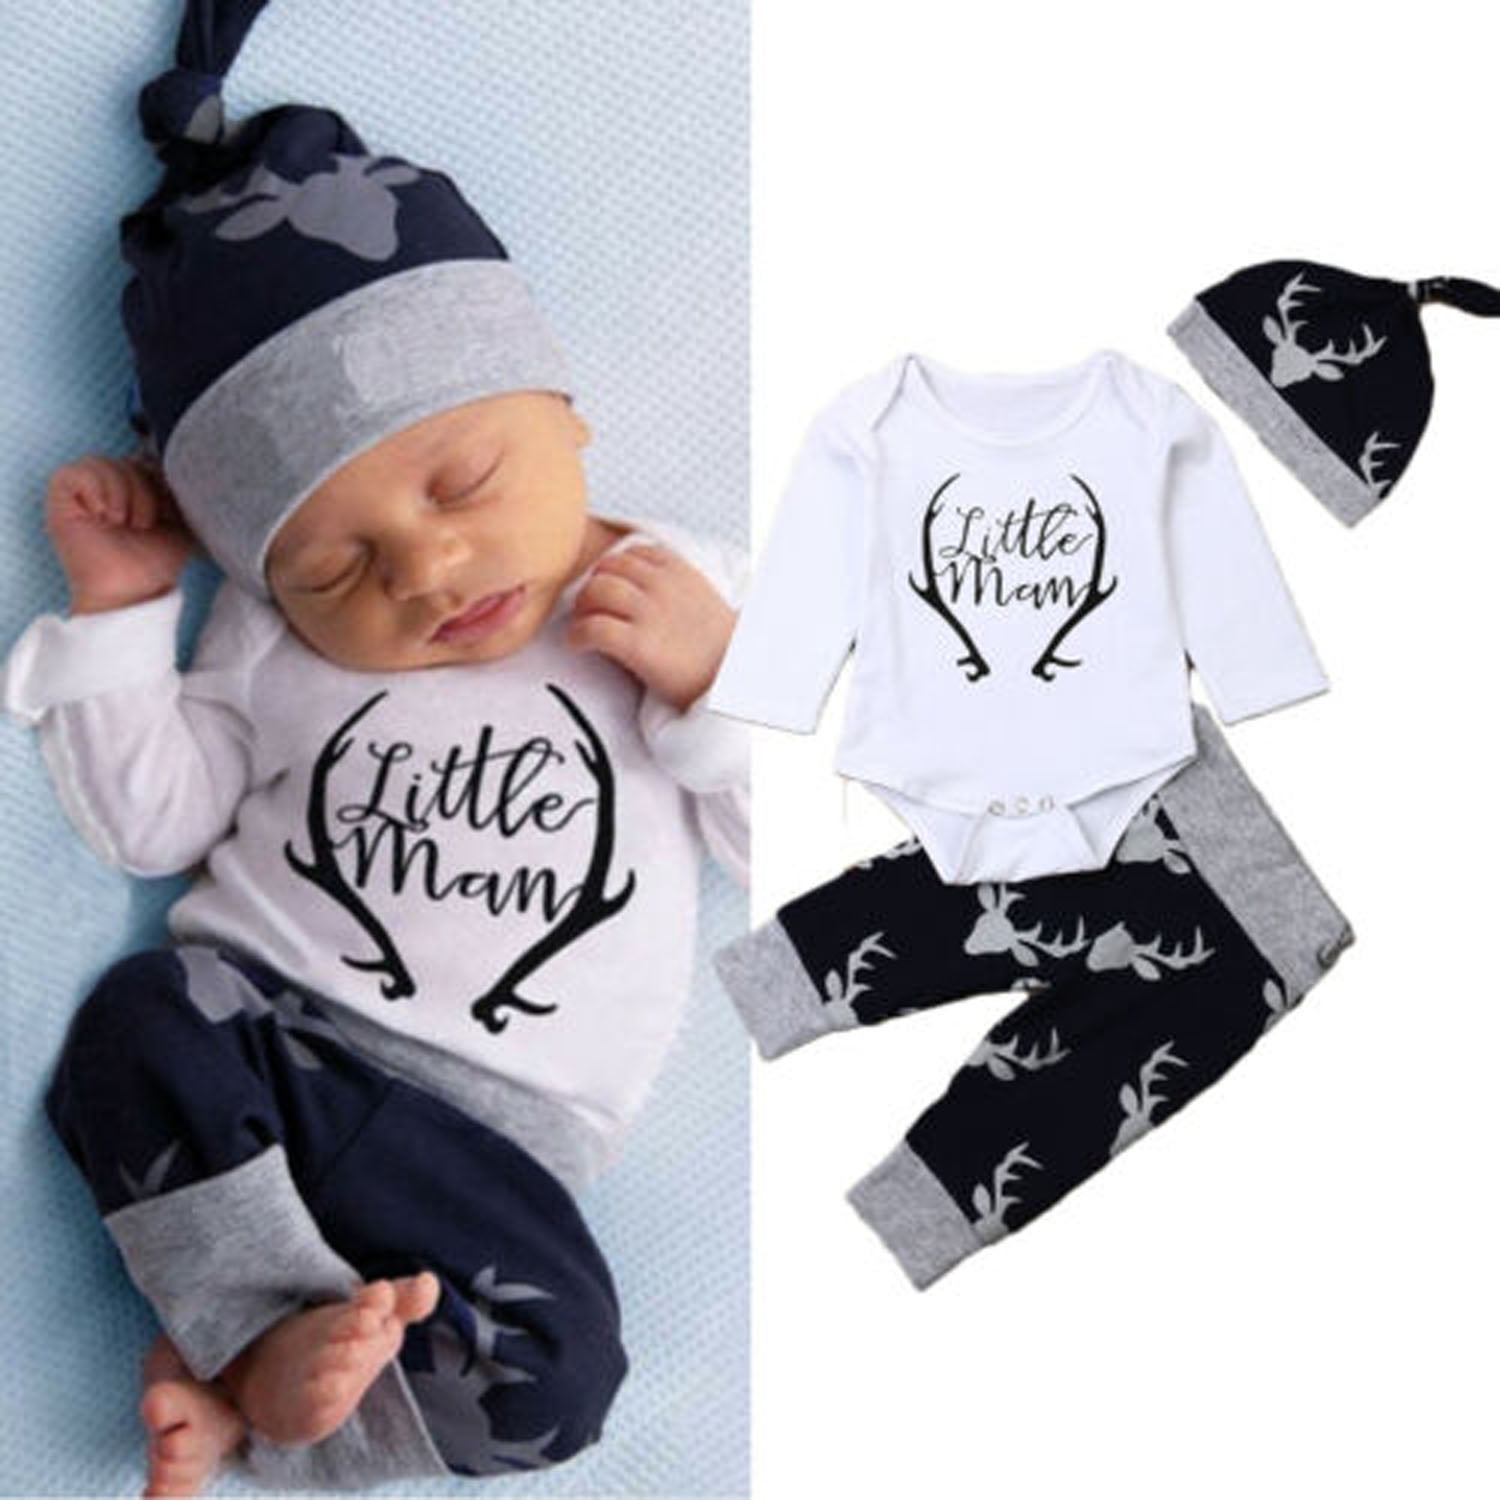 Preemie Newborn Infant Baby Boys Clothes Bodysuit Romper Pants Hats Outfit Fall Winter Set